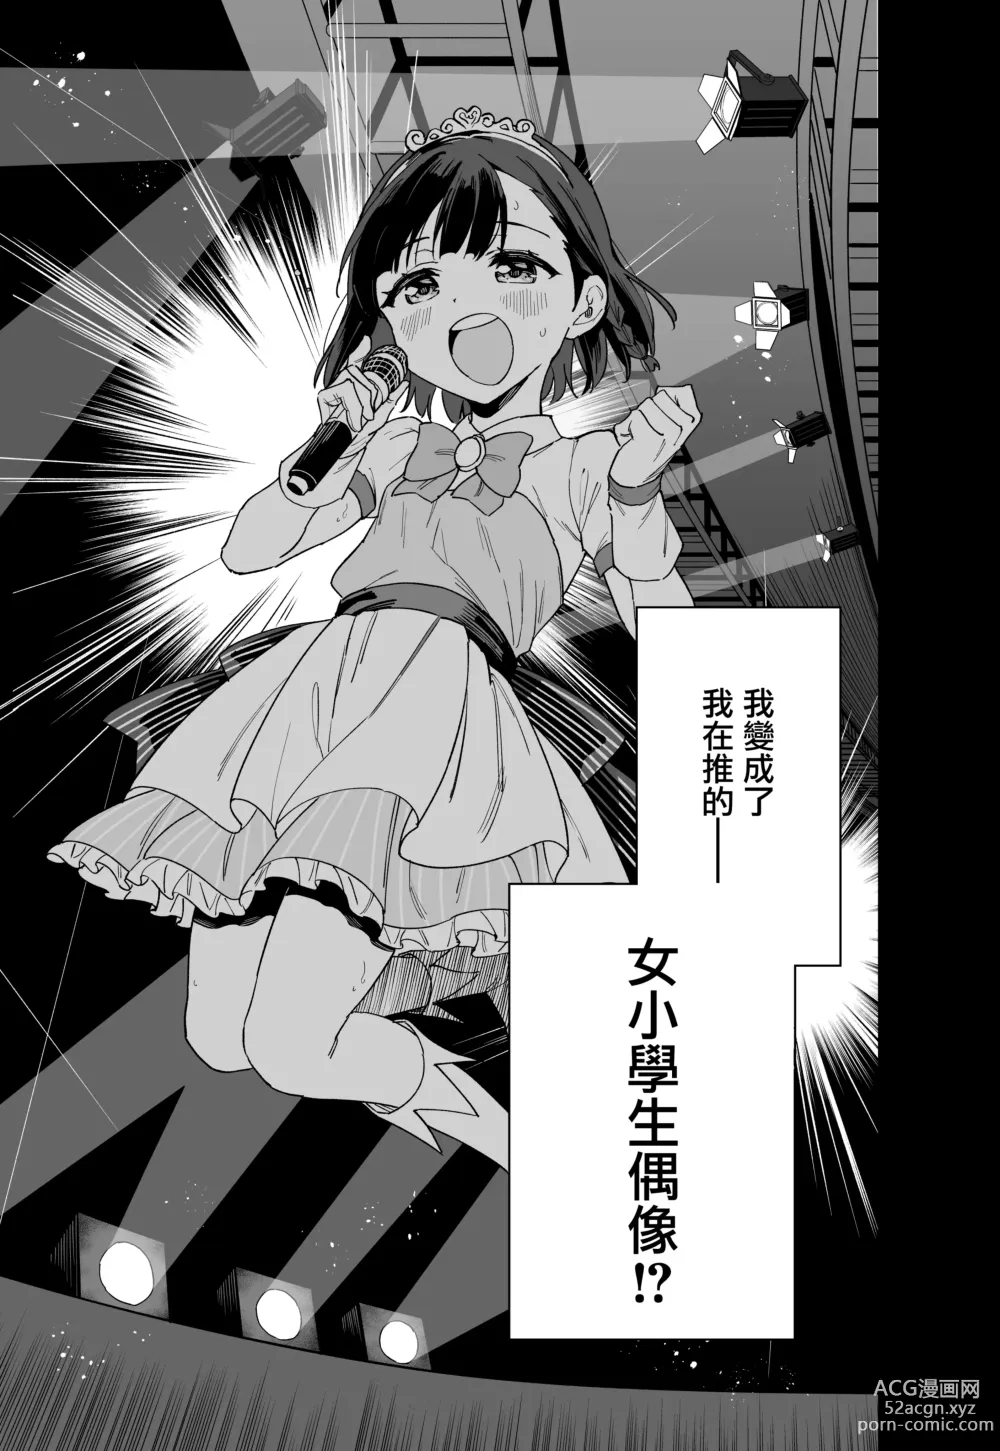 Page 6 of doujinshi 性转成为○学女生偶像之后和所有队员百合贴贴